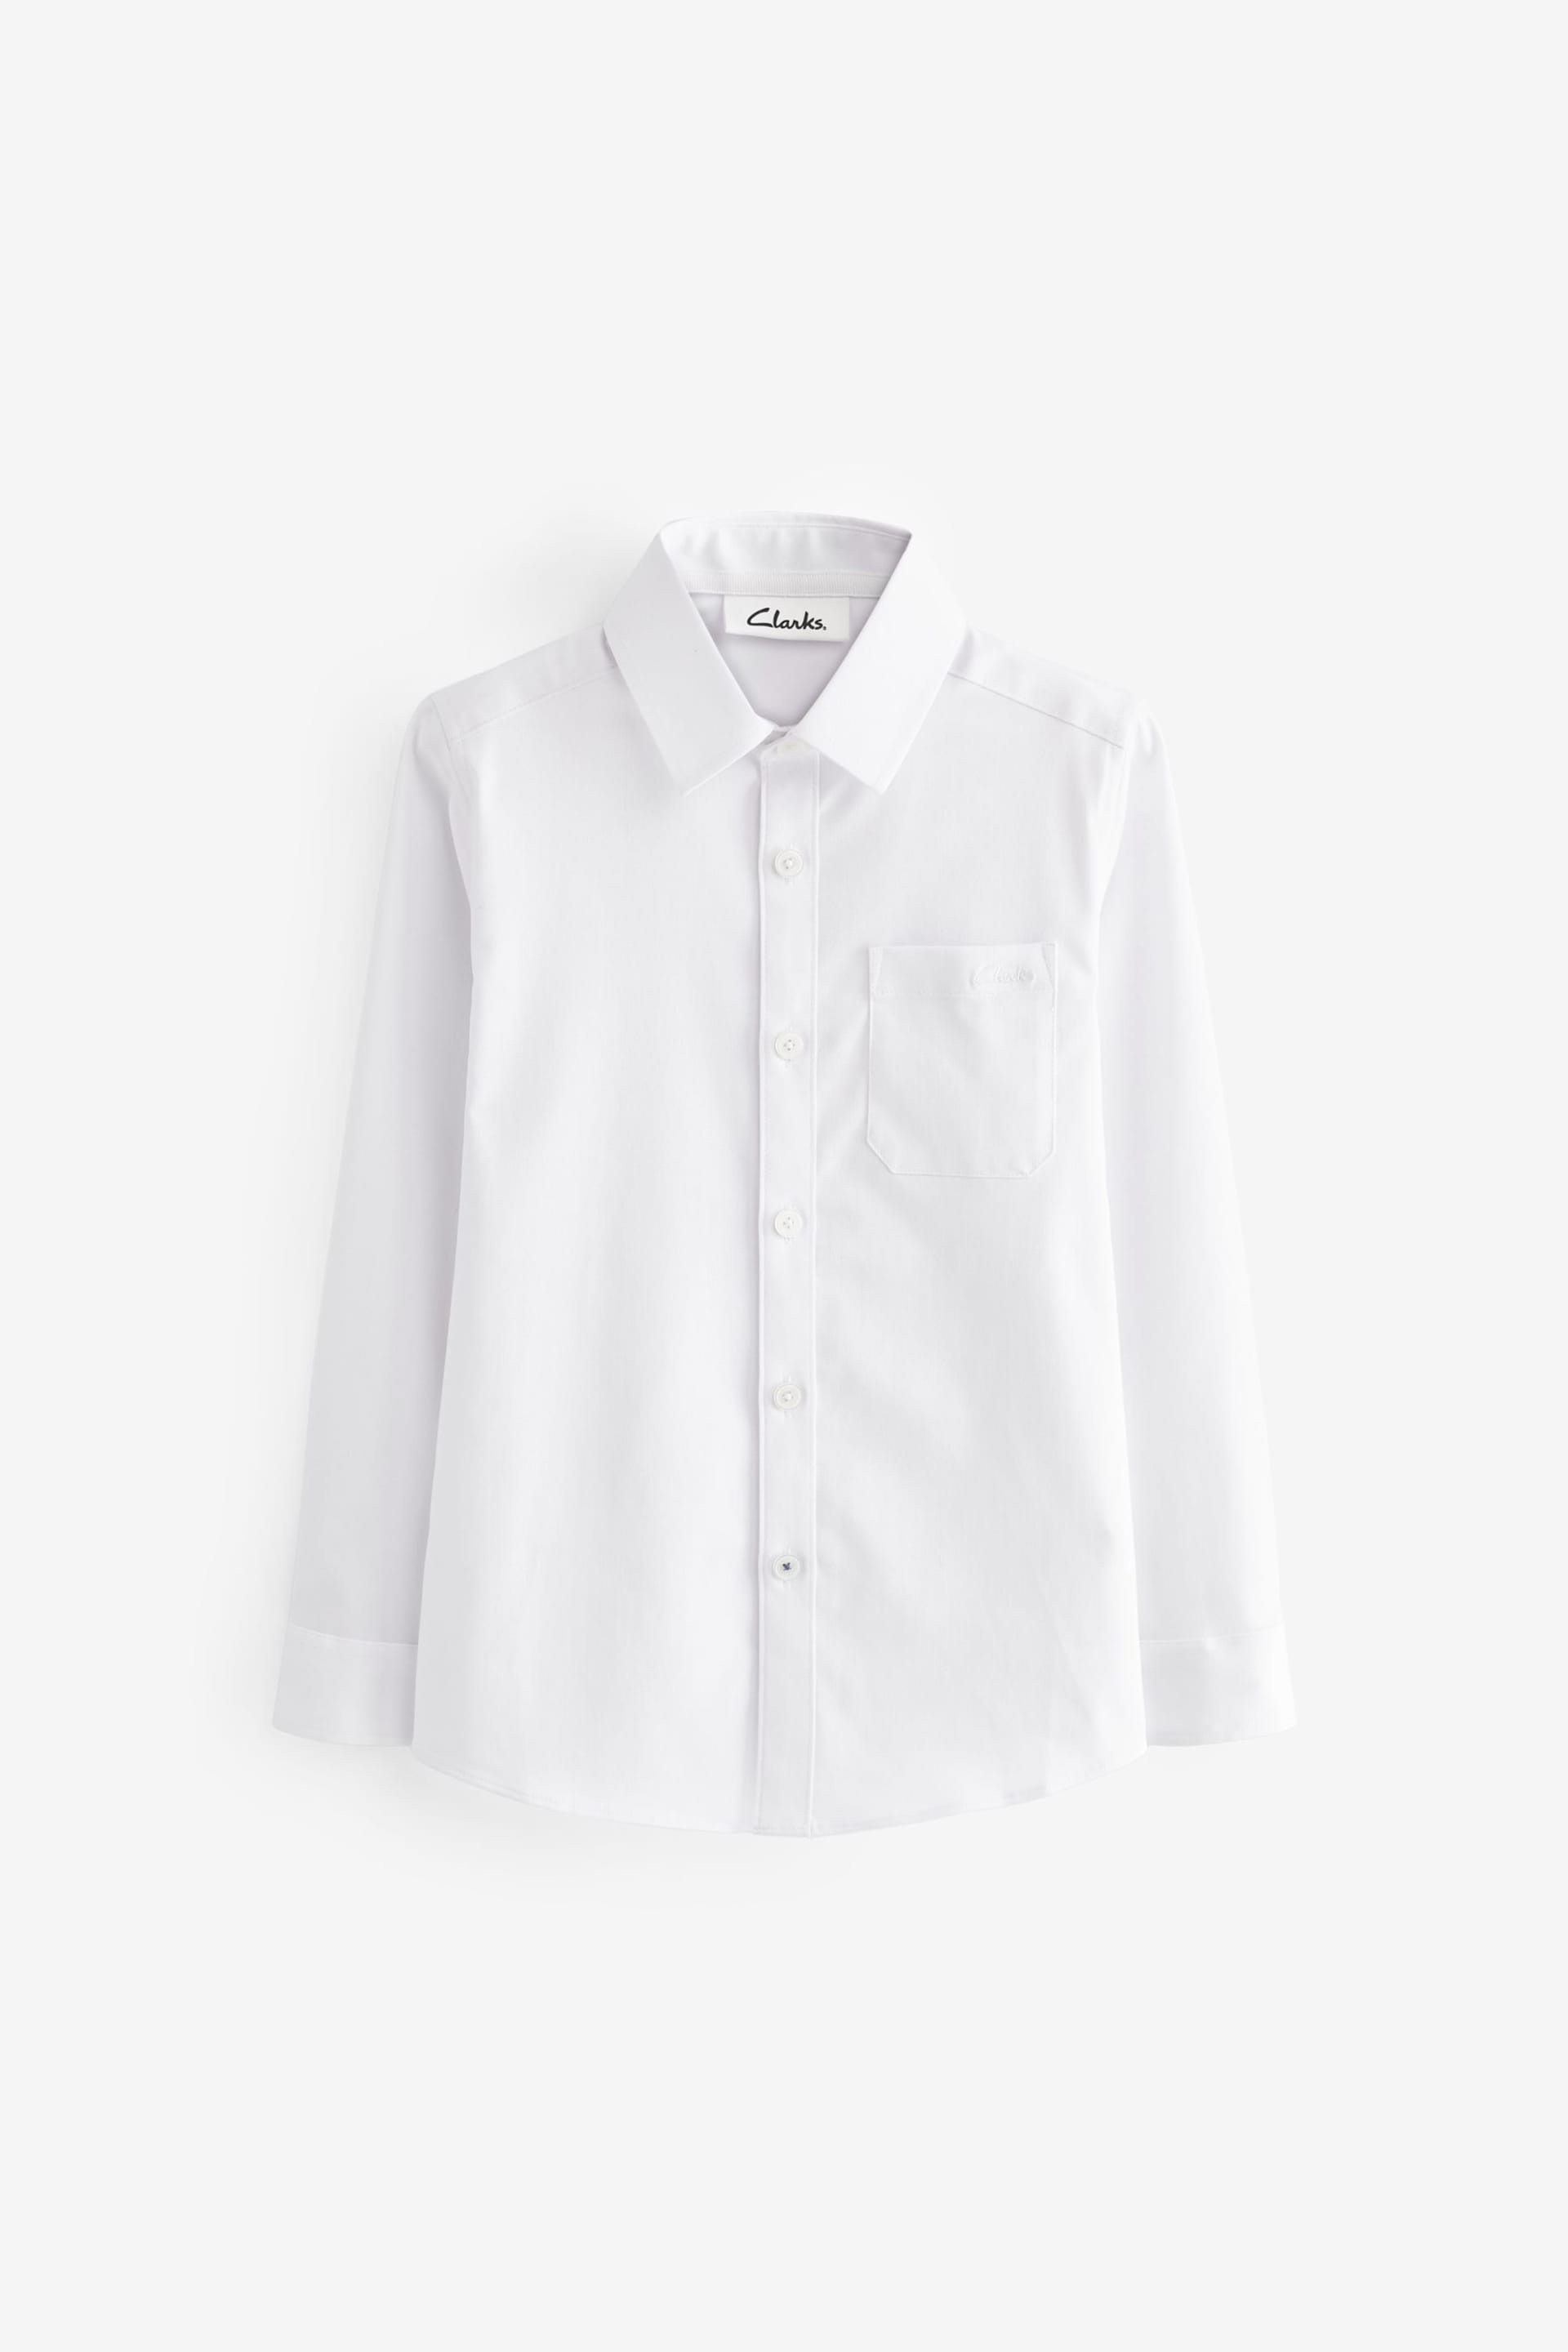 Clarks White Long Sleeve Senior Boys School Shirt with Stretch - Image 6 of 7